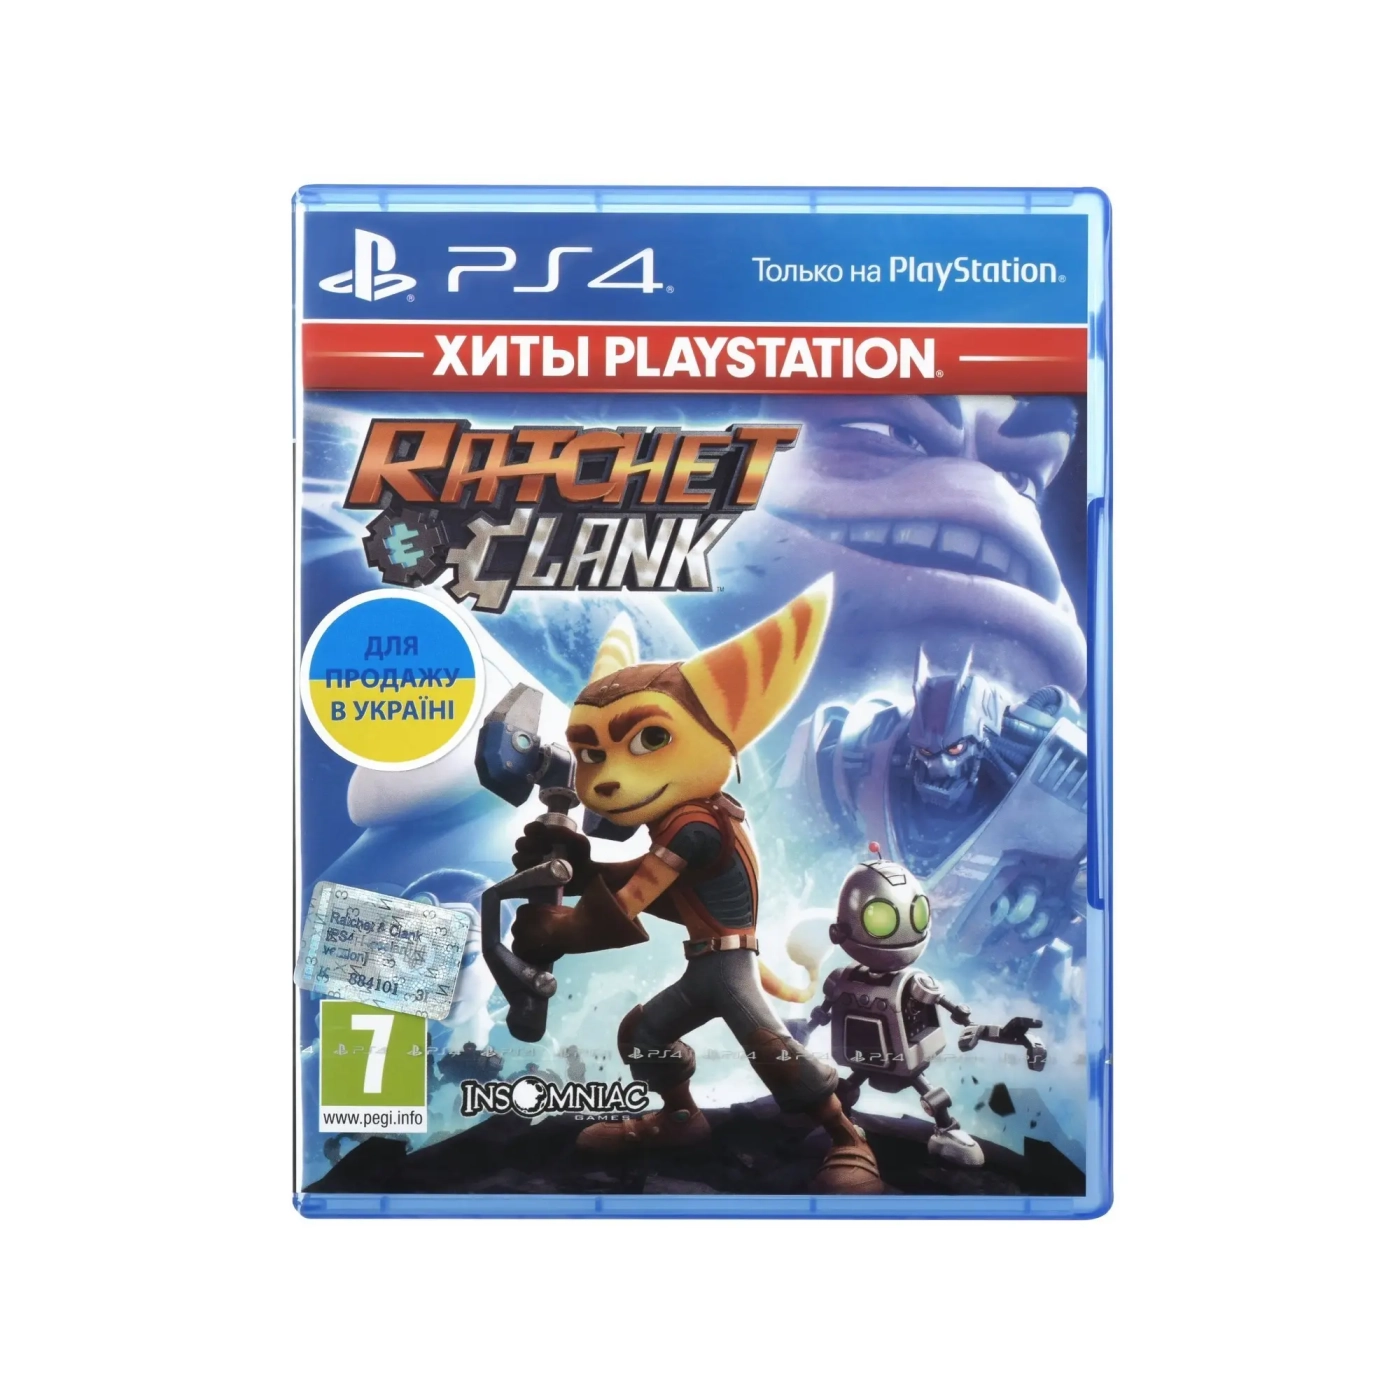 Купить Игра Sony Ratchet & Clank [PS4, Russian version] (9700999) - фото 1